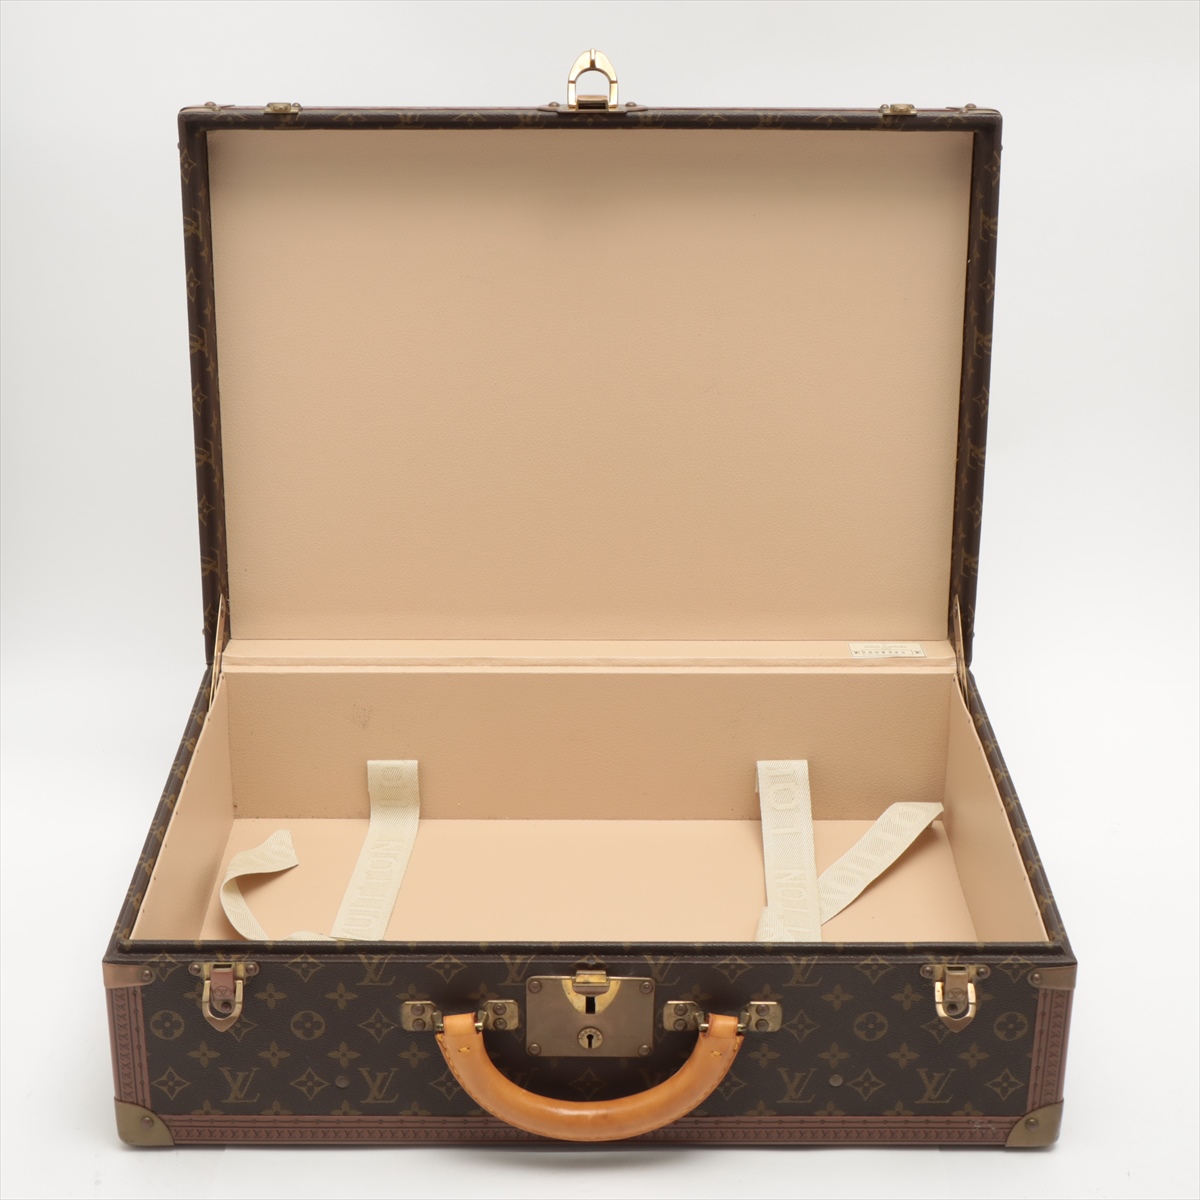 Louis Vuitton Monogram Suitecase Bisten 55 M21327 No key - The